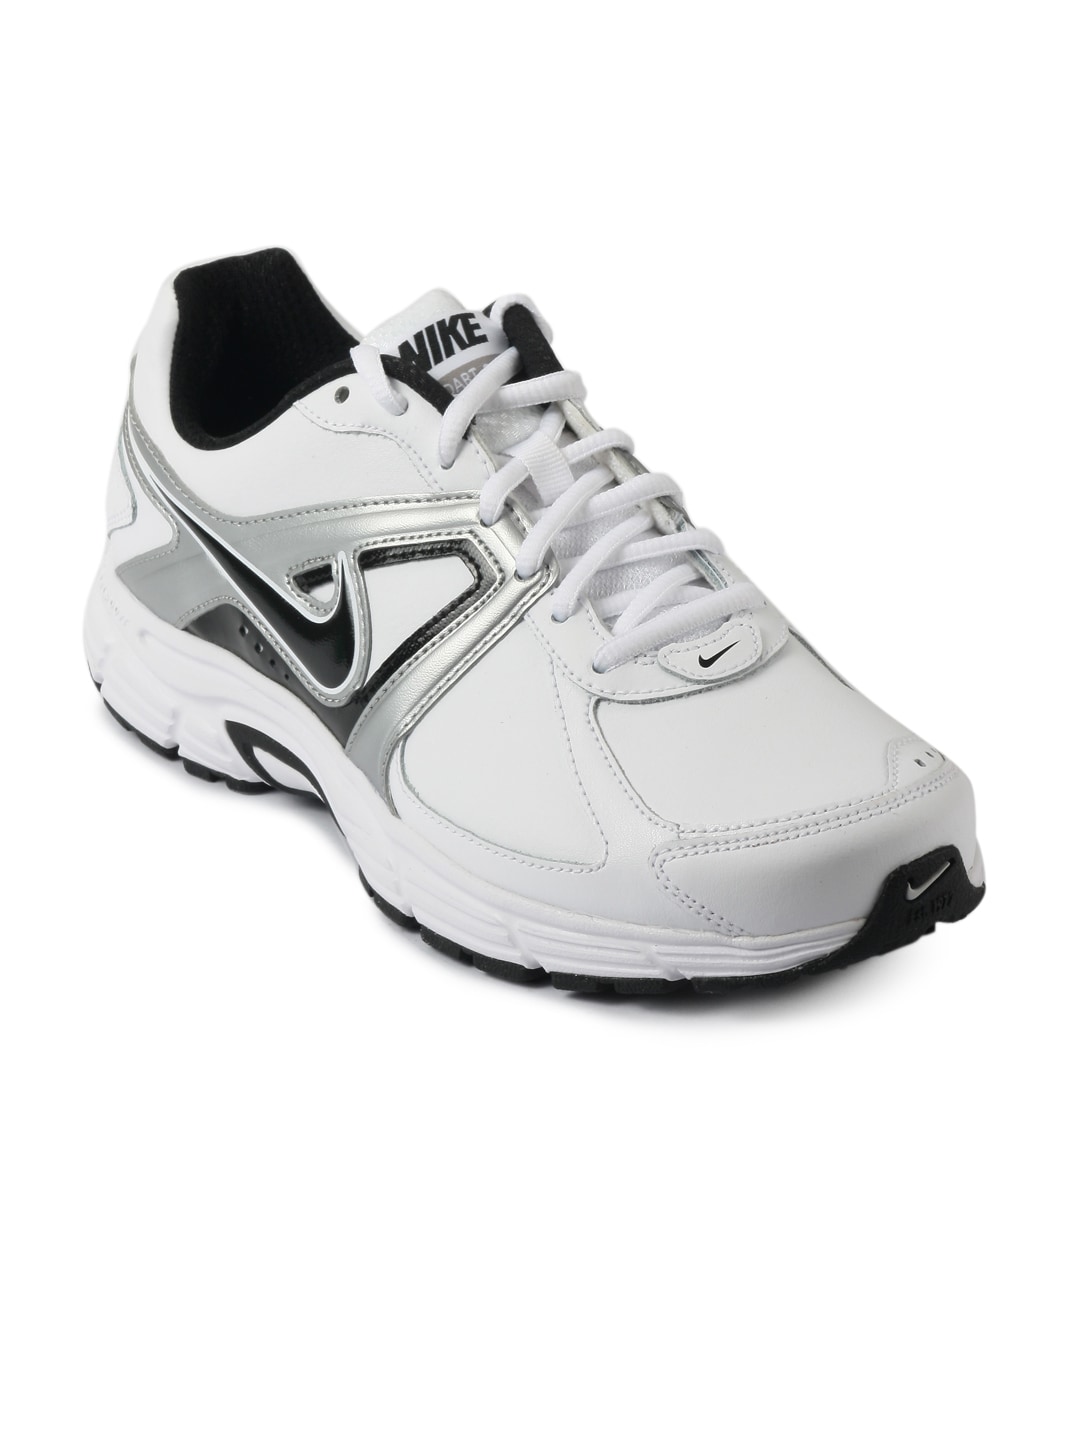 Nike Men Dart 9 Leather White Sports Shoes